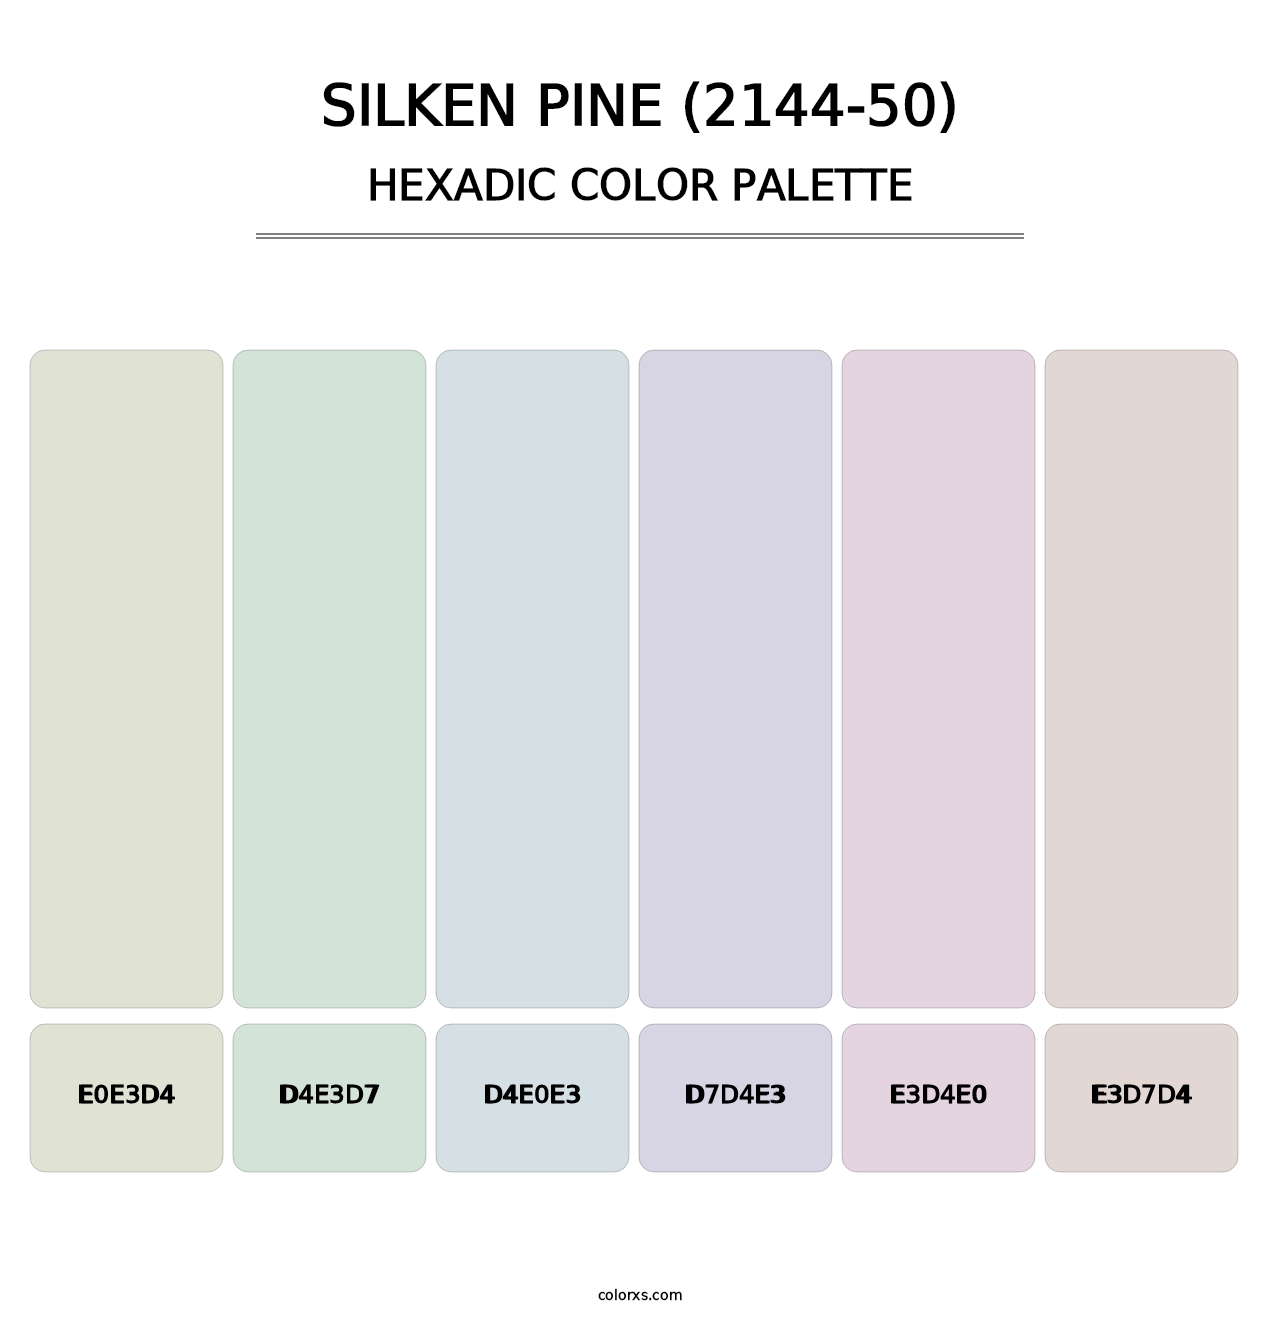 Silken Pine (2144-50) - Hexadic Color Palette